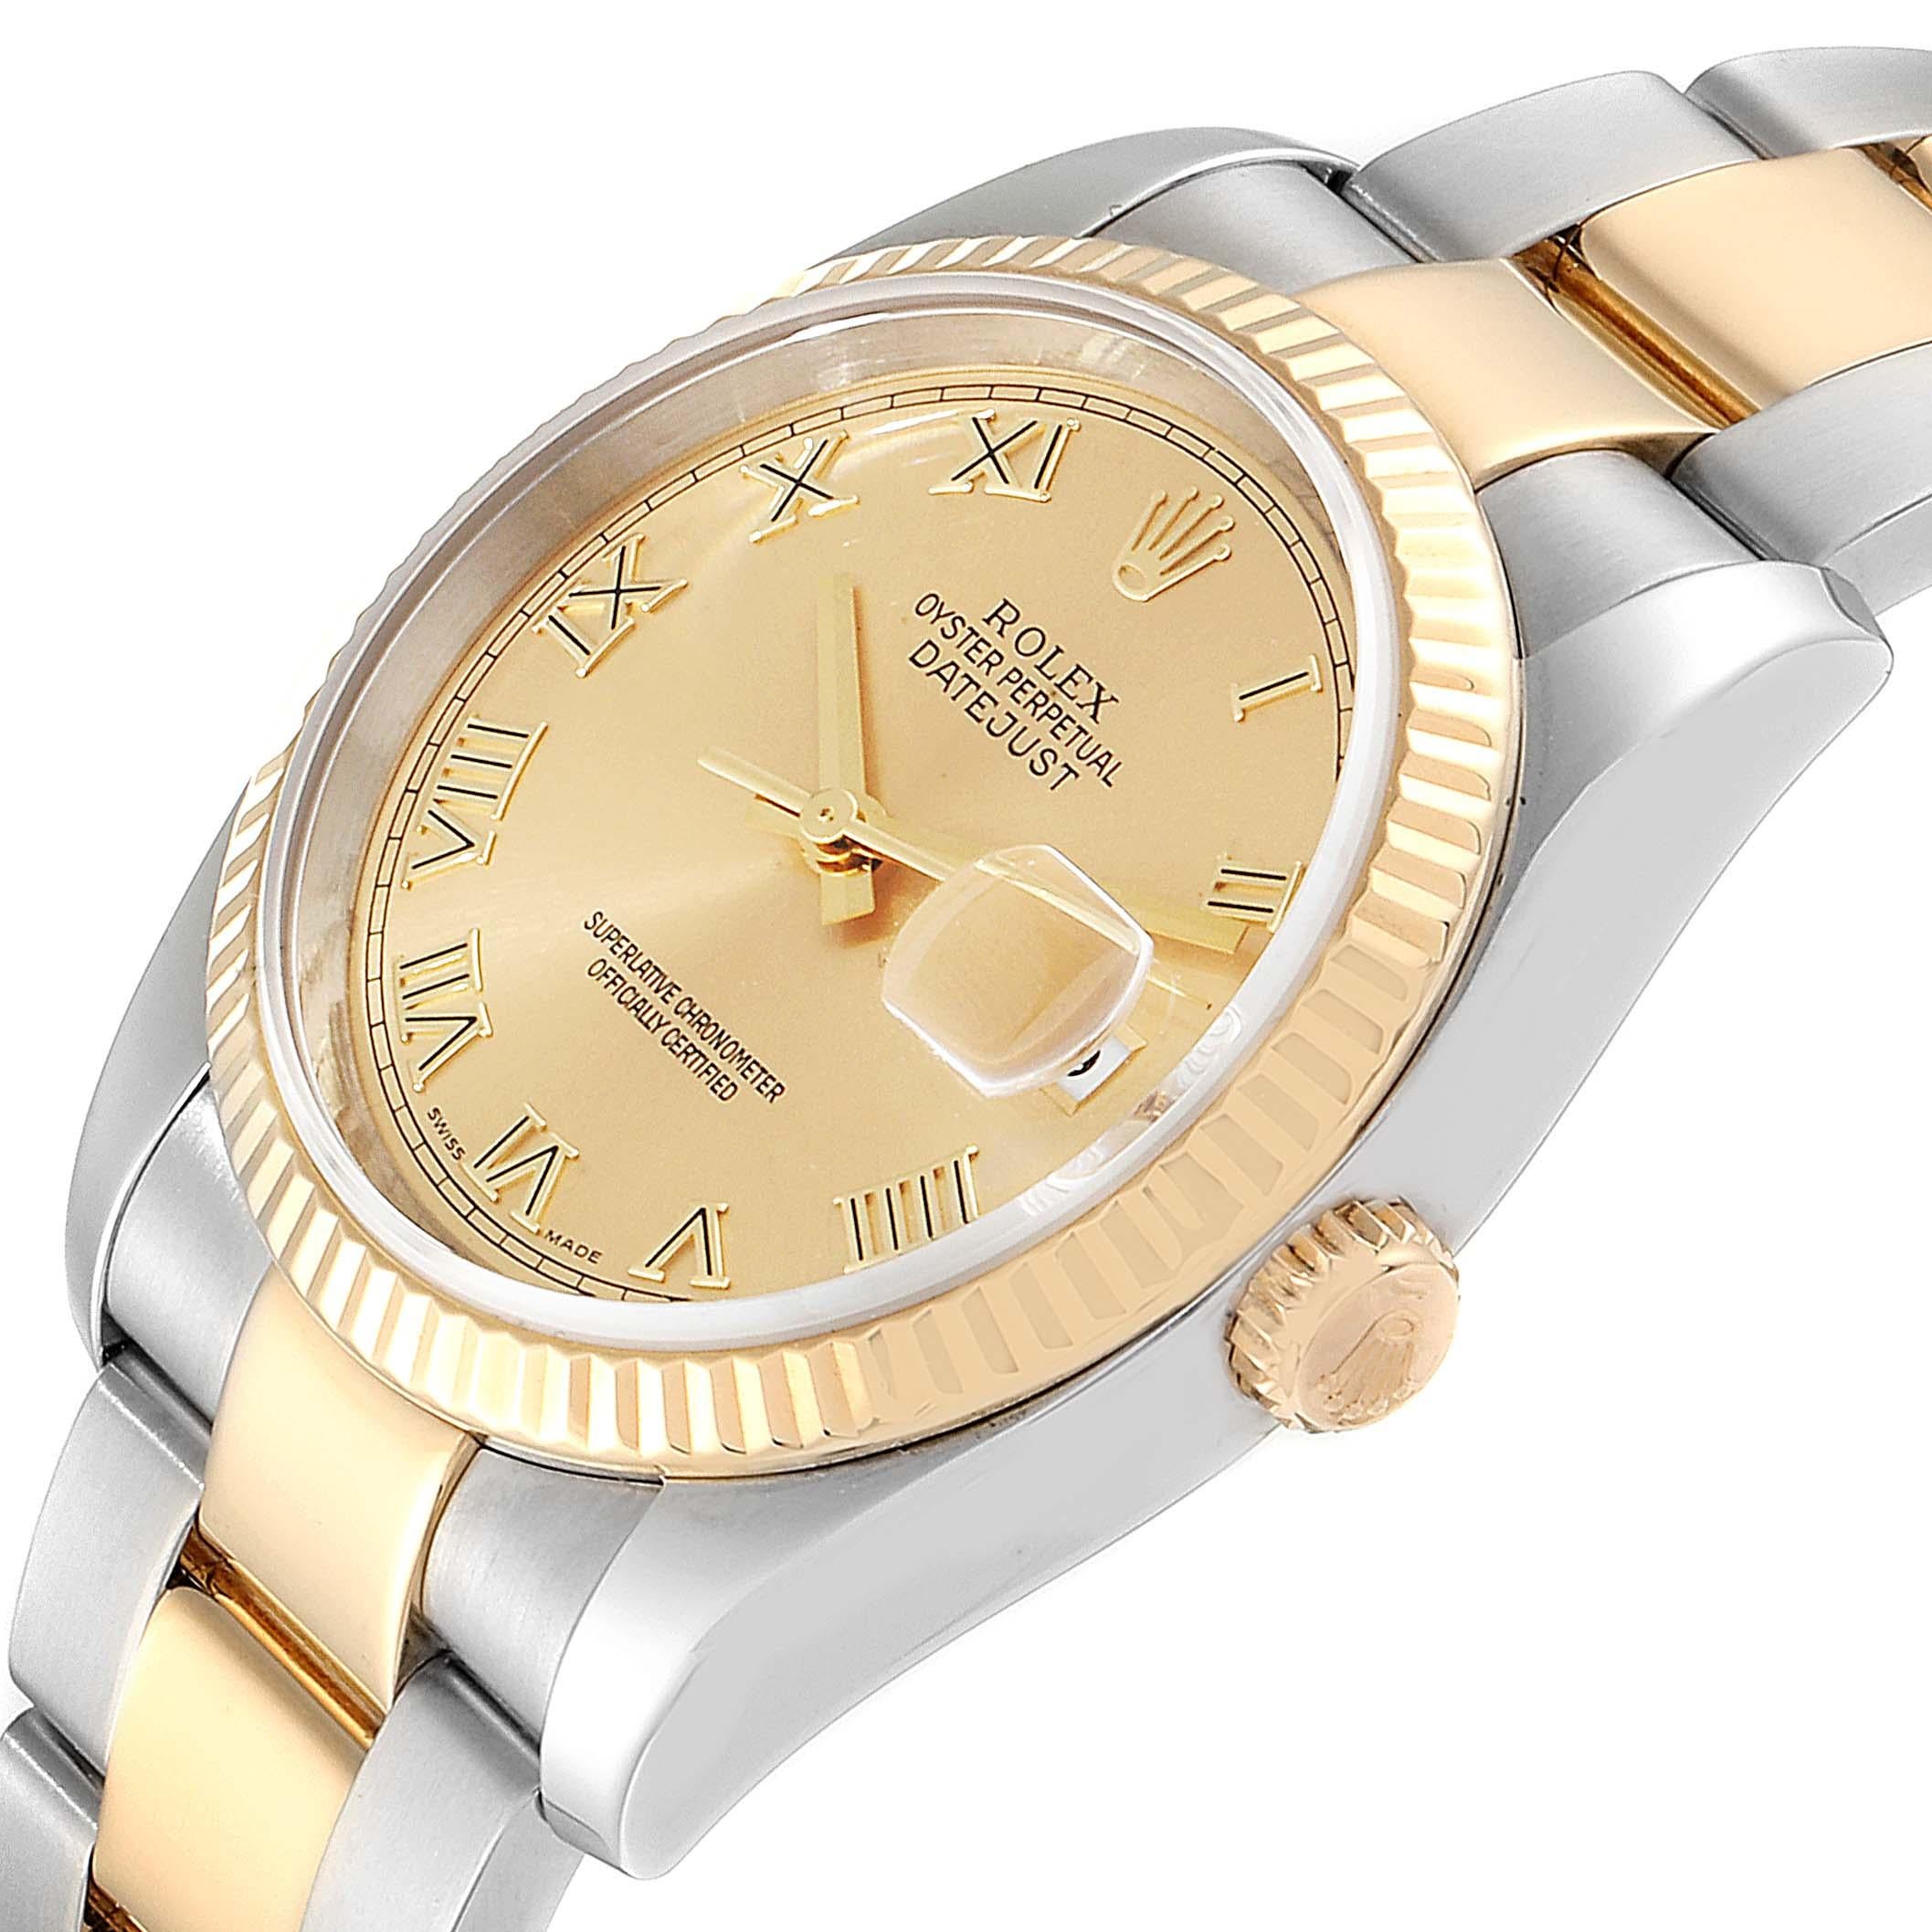 Rolex Datejust Steel Yellow Gold Oyster Bracelet Men's Watch 116233 2